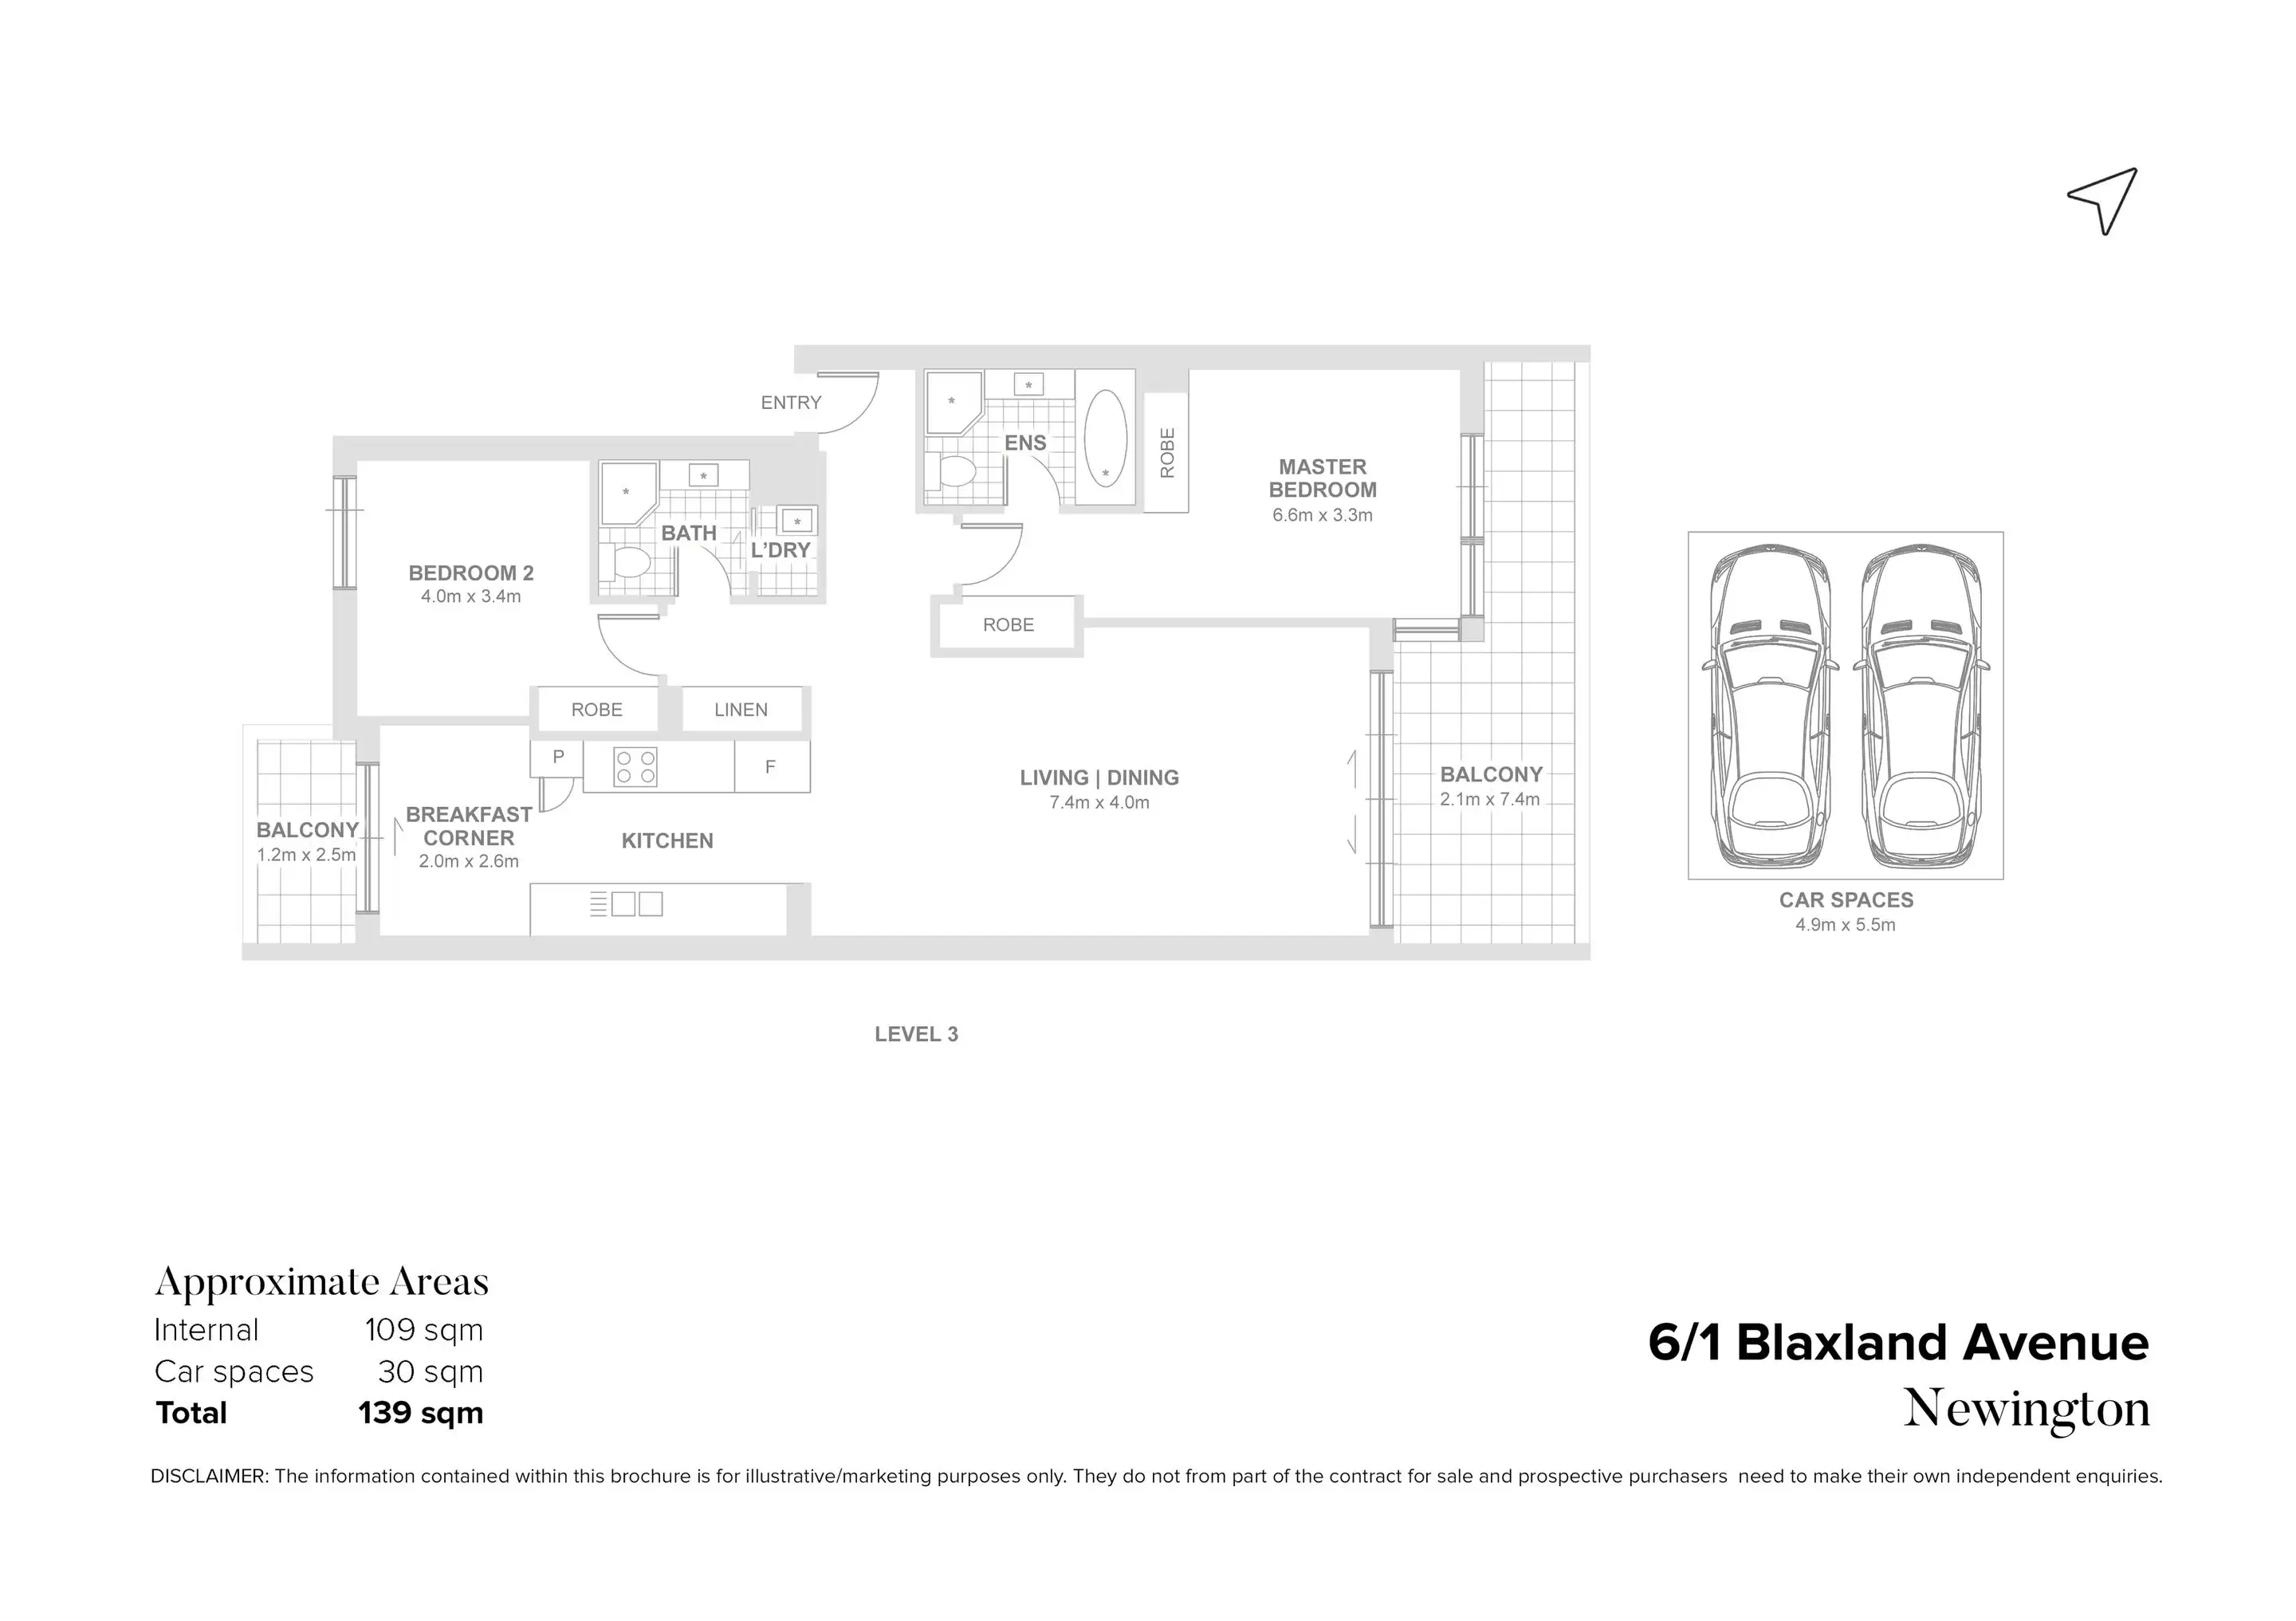 6/1 Blaxland Avenue, Newington Sold by Chidiac Realty - floorplan